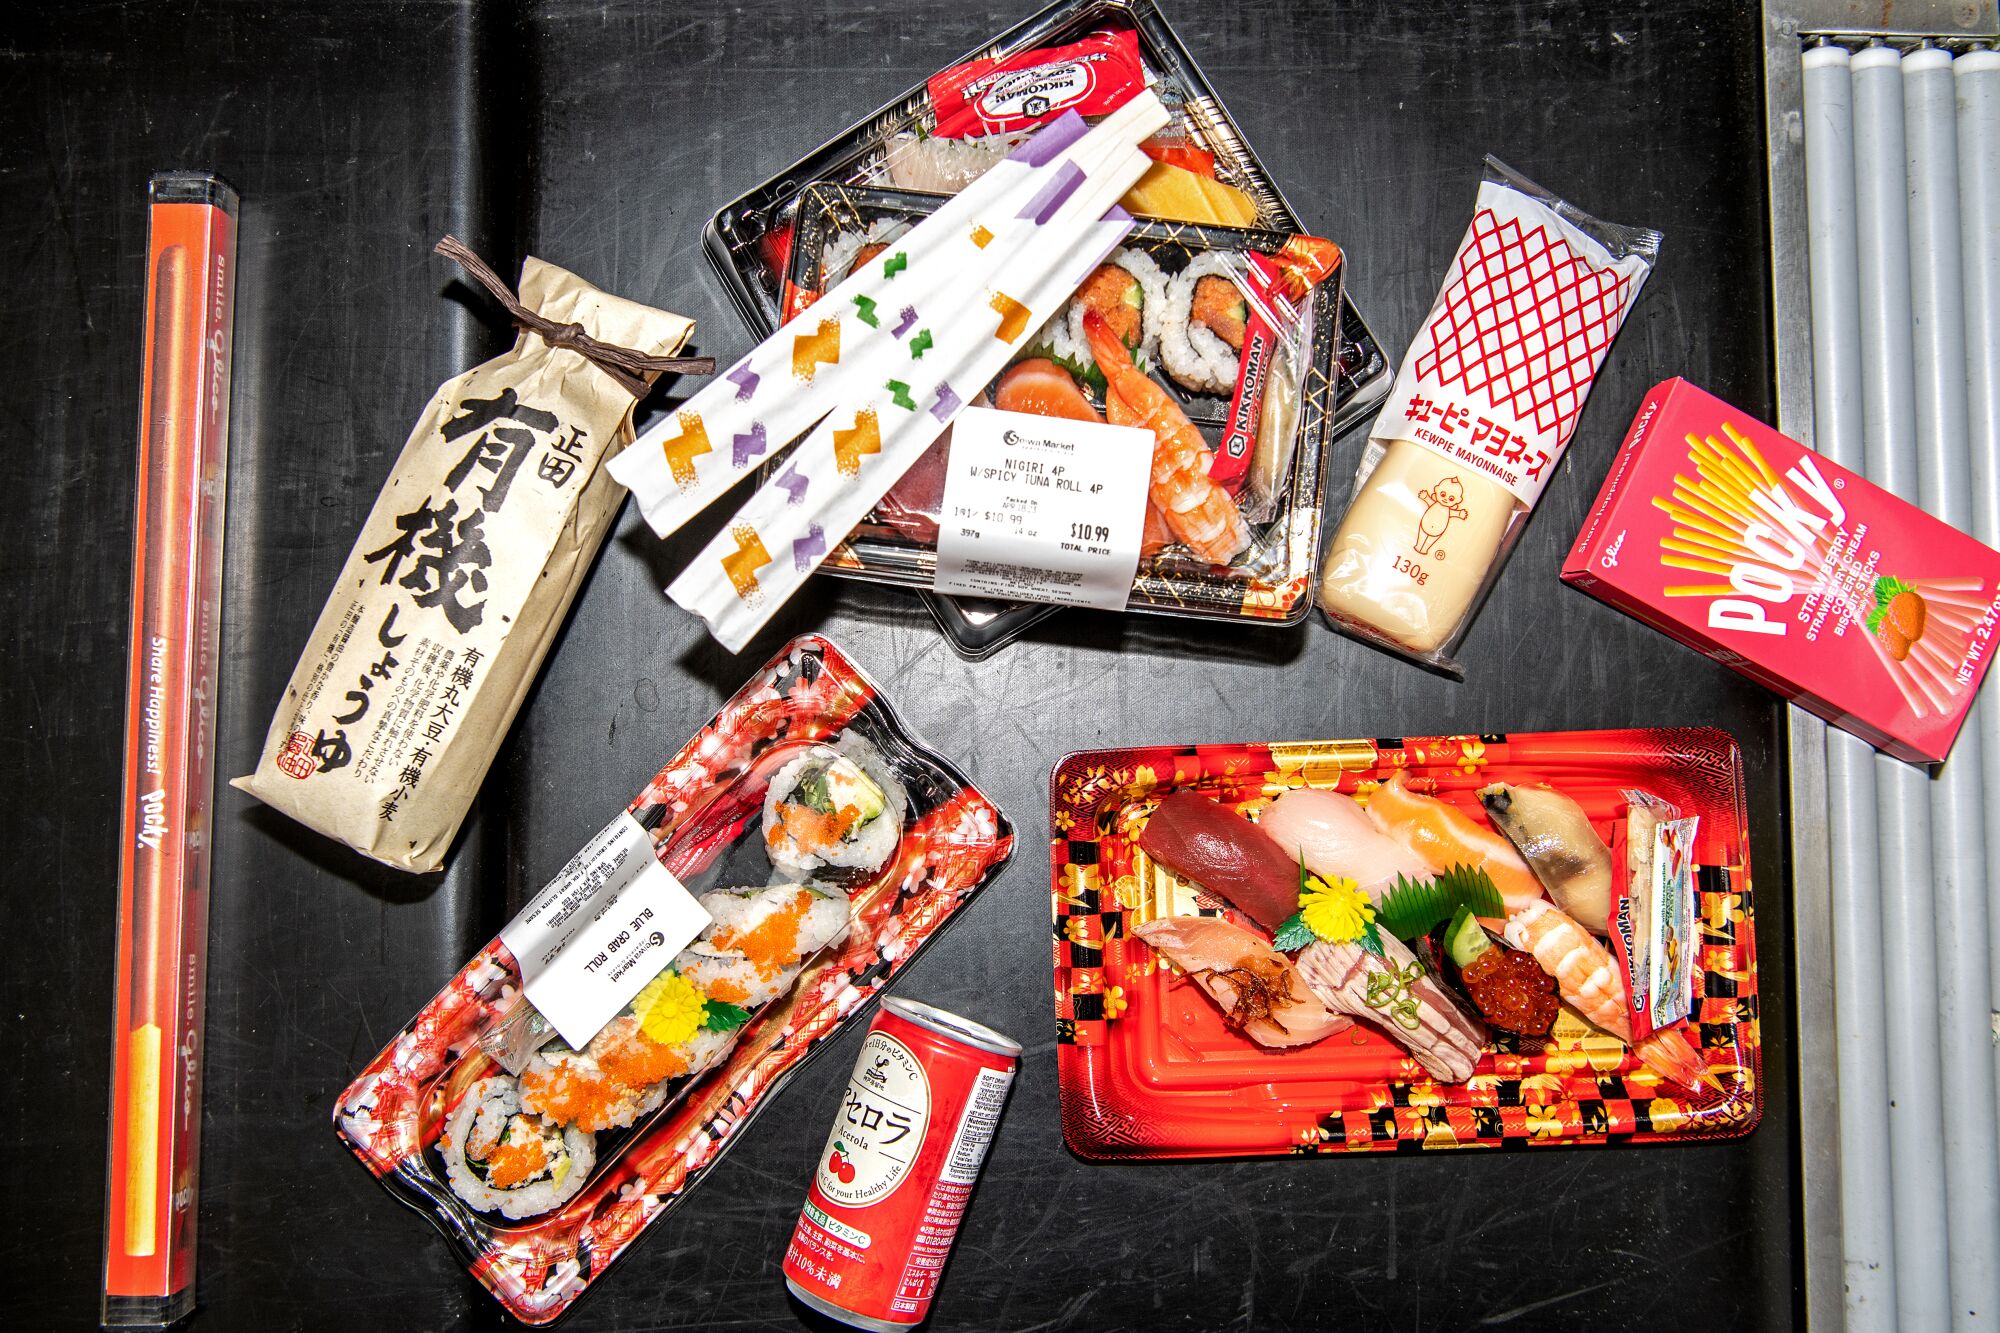 Sushi items from Seiwa Market